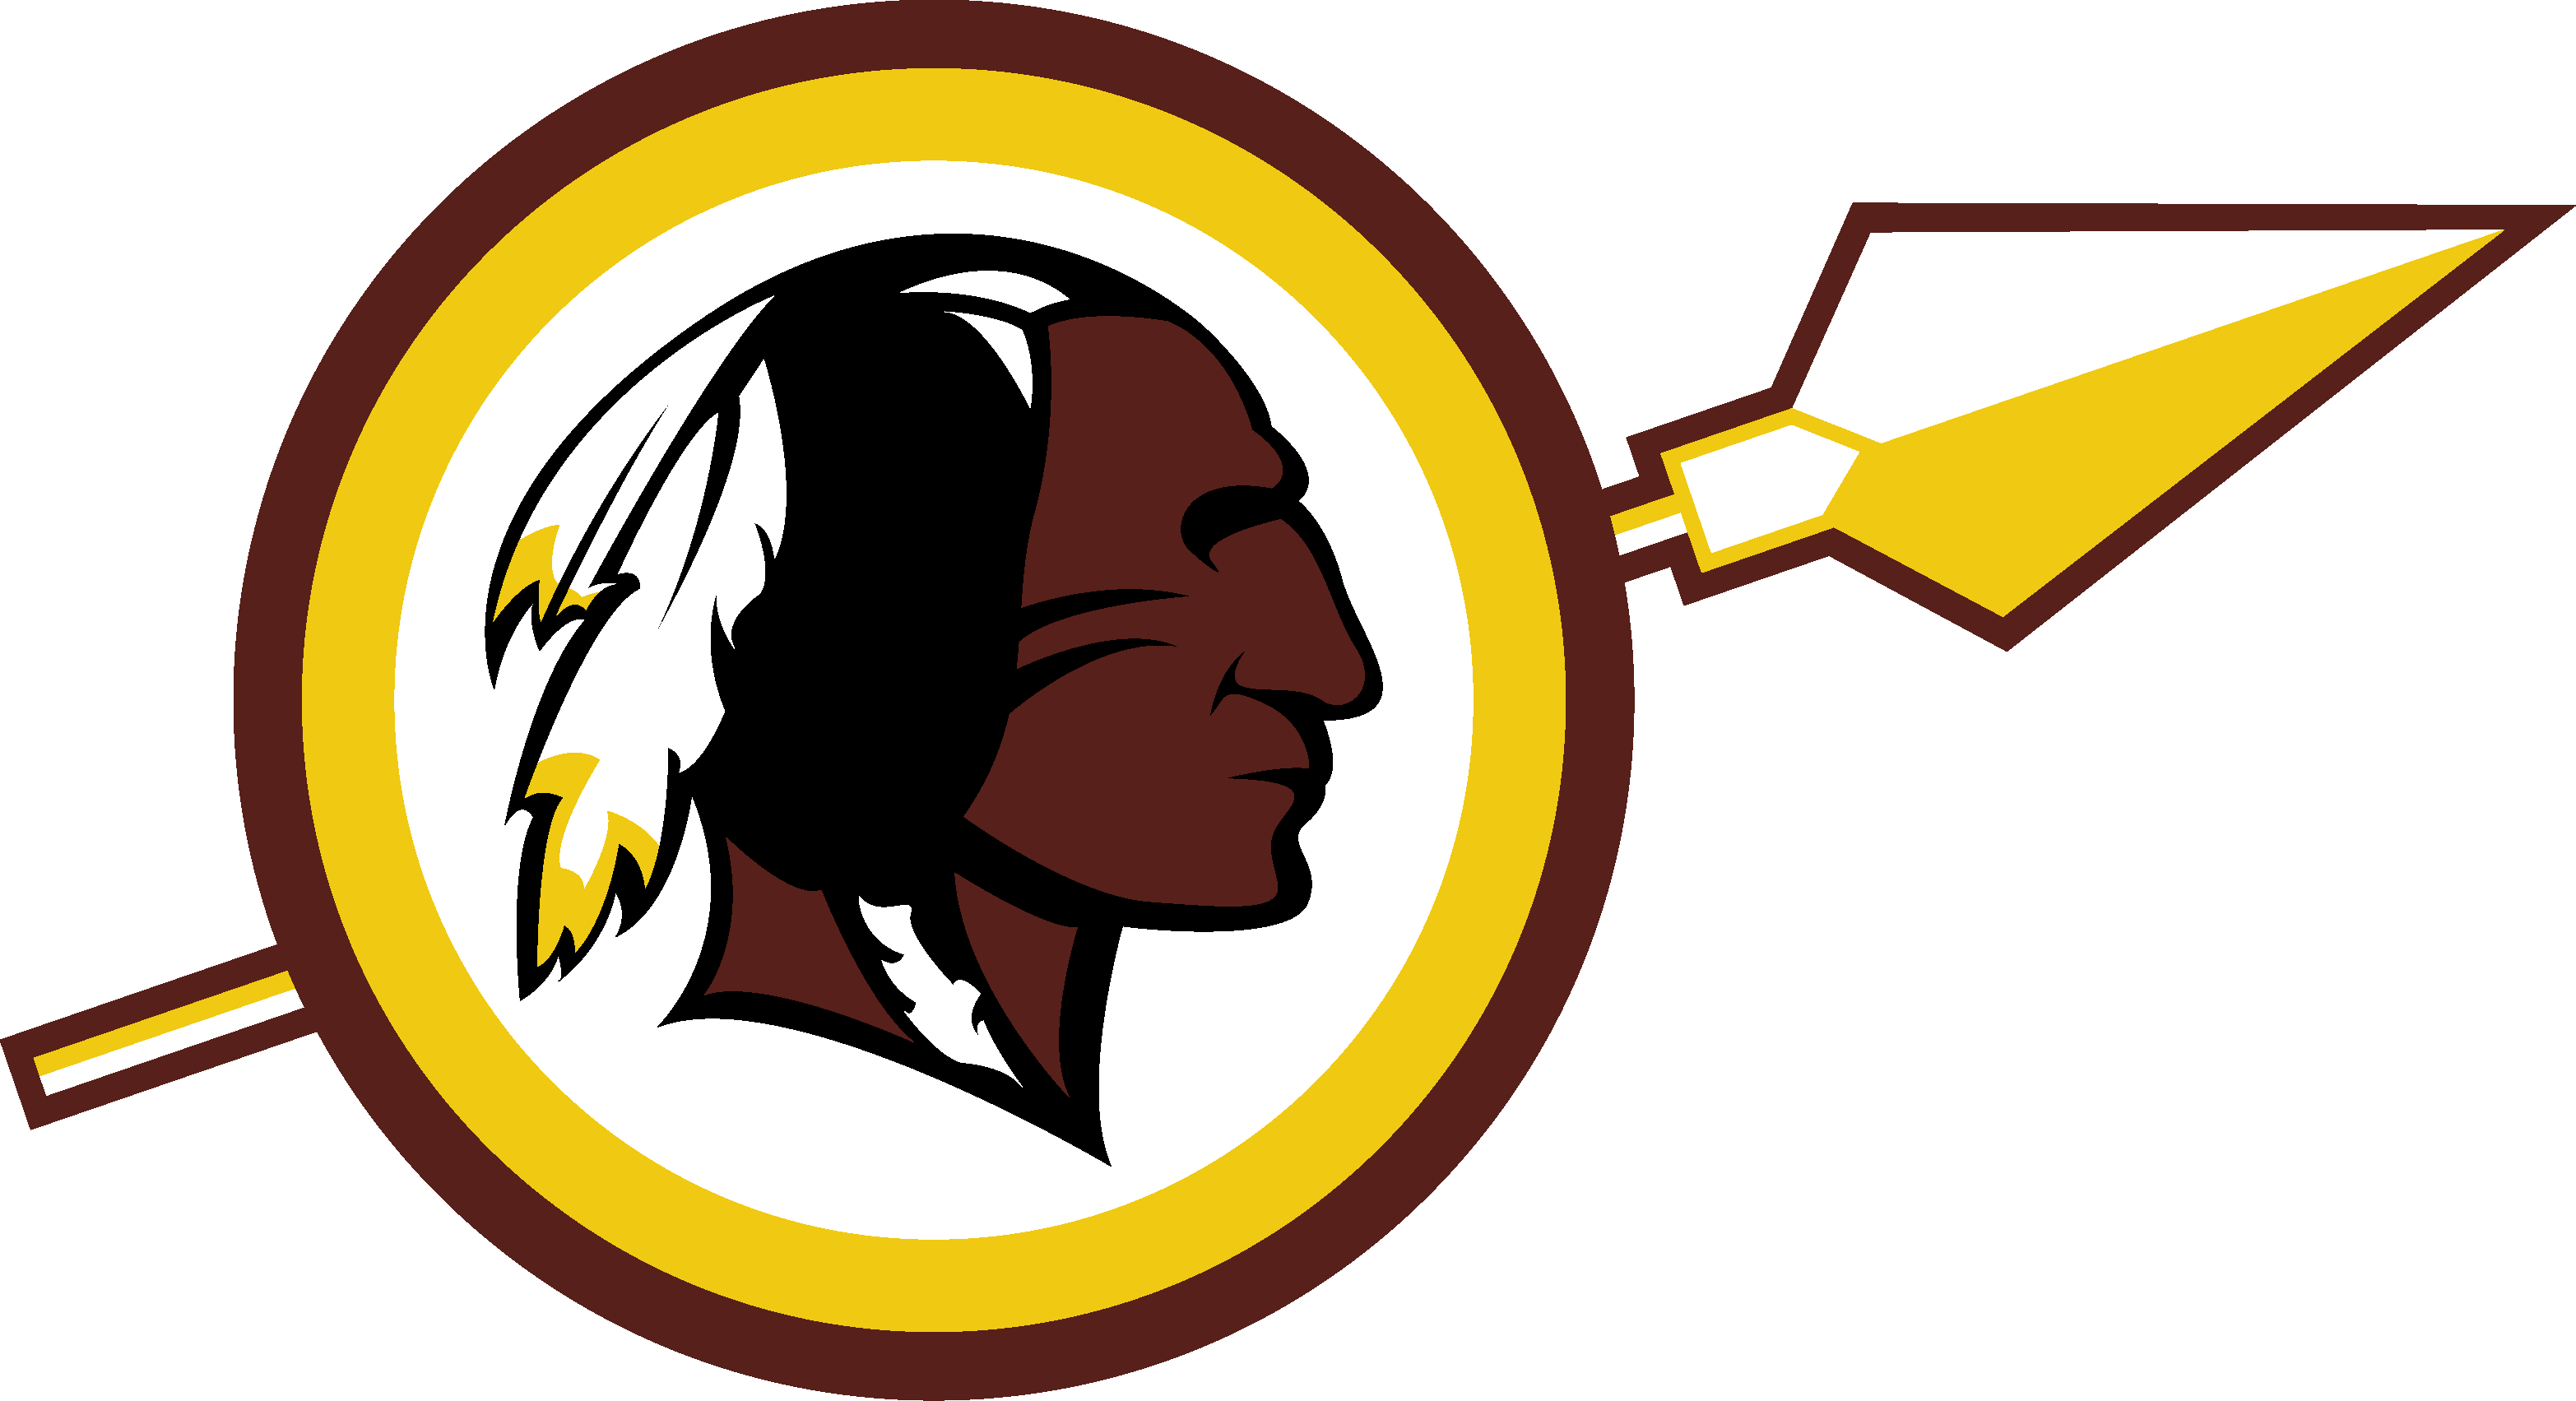 Redshin Logo - New Washington Redskins logo - Concepts - Chris Creamer's Sports ...